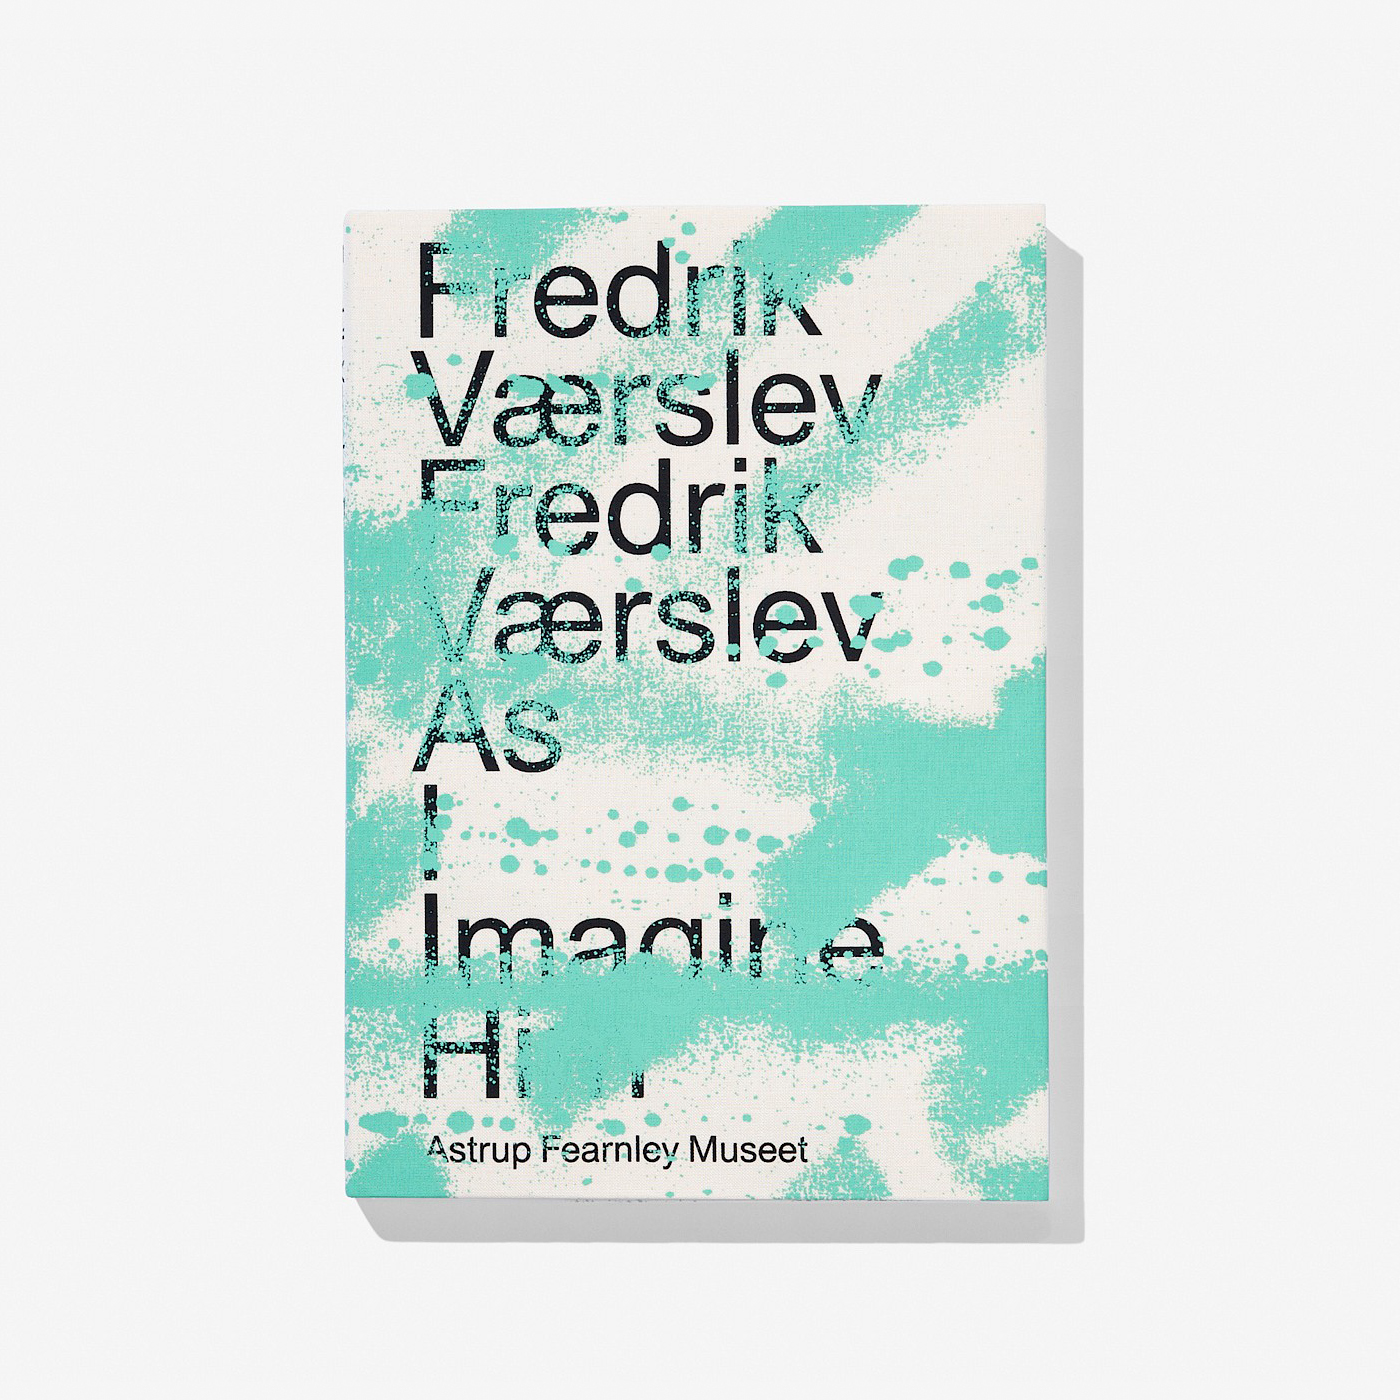 Book design by Zak Group for Norwegian artist Fredrik Værslev coinciding with the exhibition Fredrik Værslev As I Imagine Him